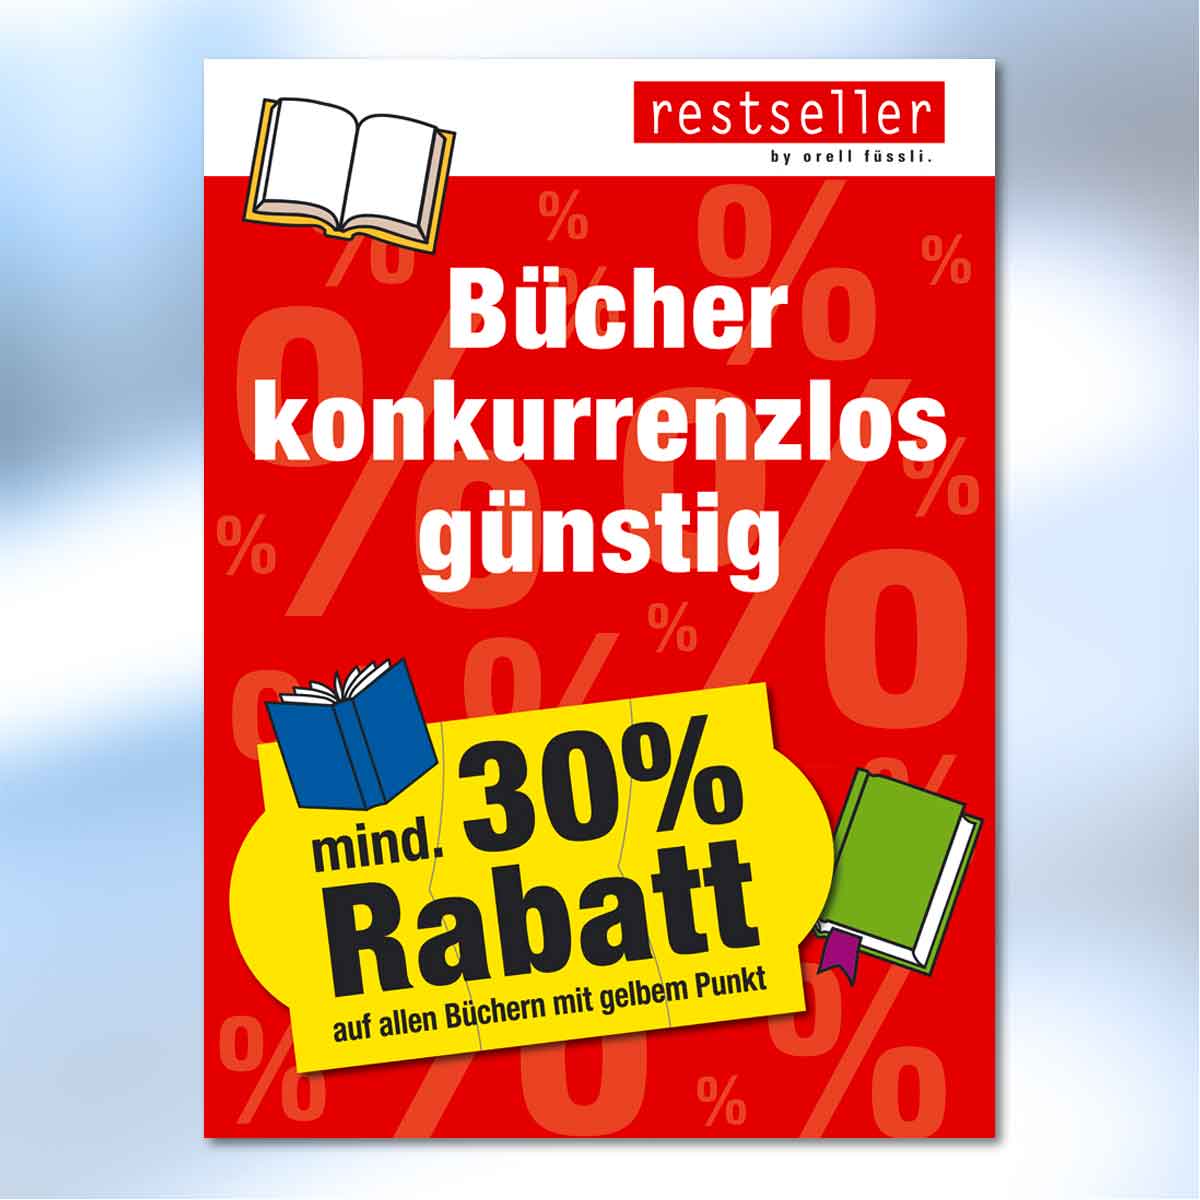 Verkaufsstellen-Plakat der Restseller-Shops von Orell Füssli